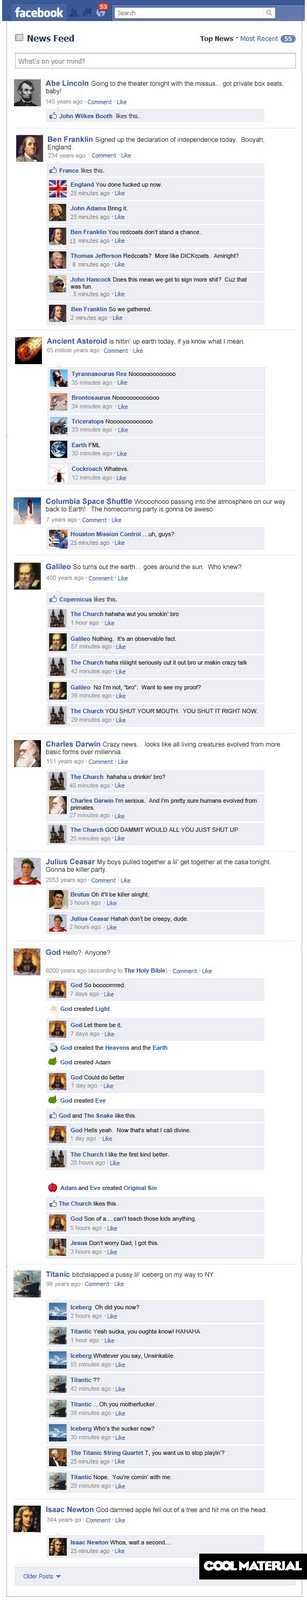 funny facebook updates. Pretty funny!